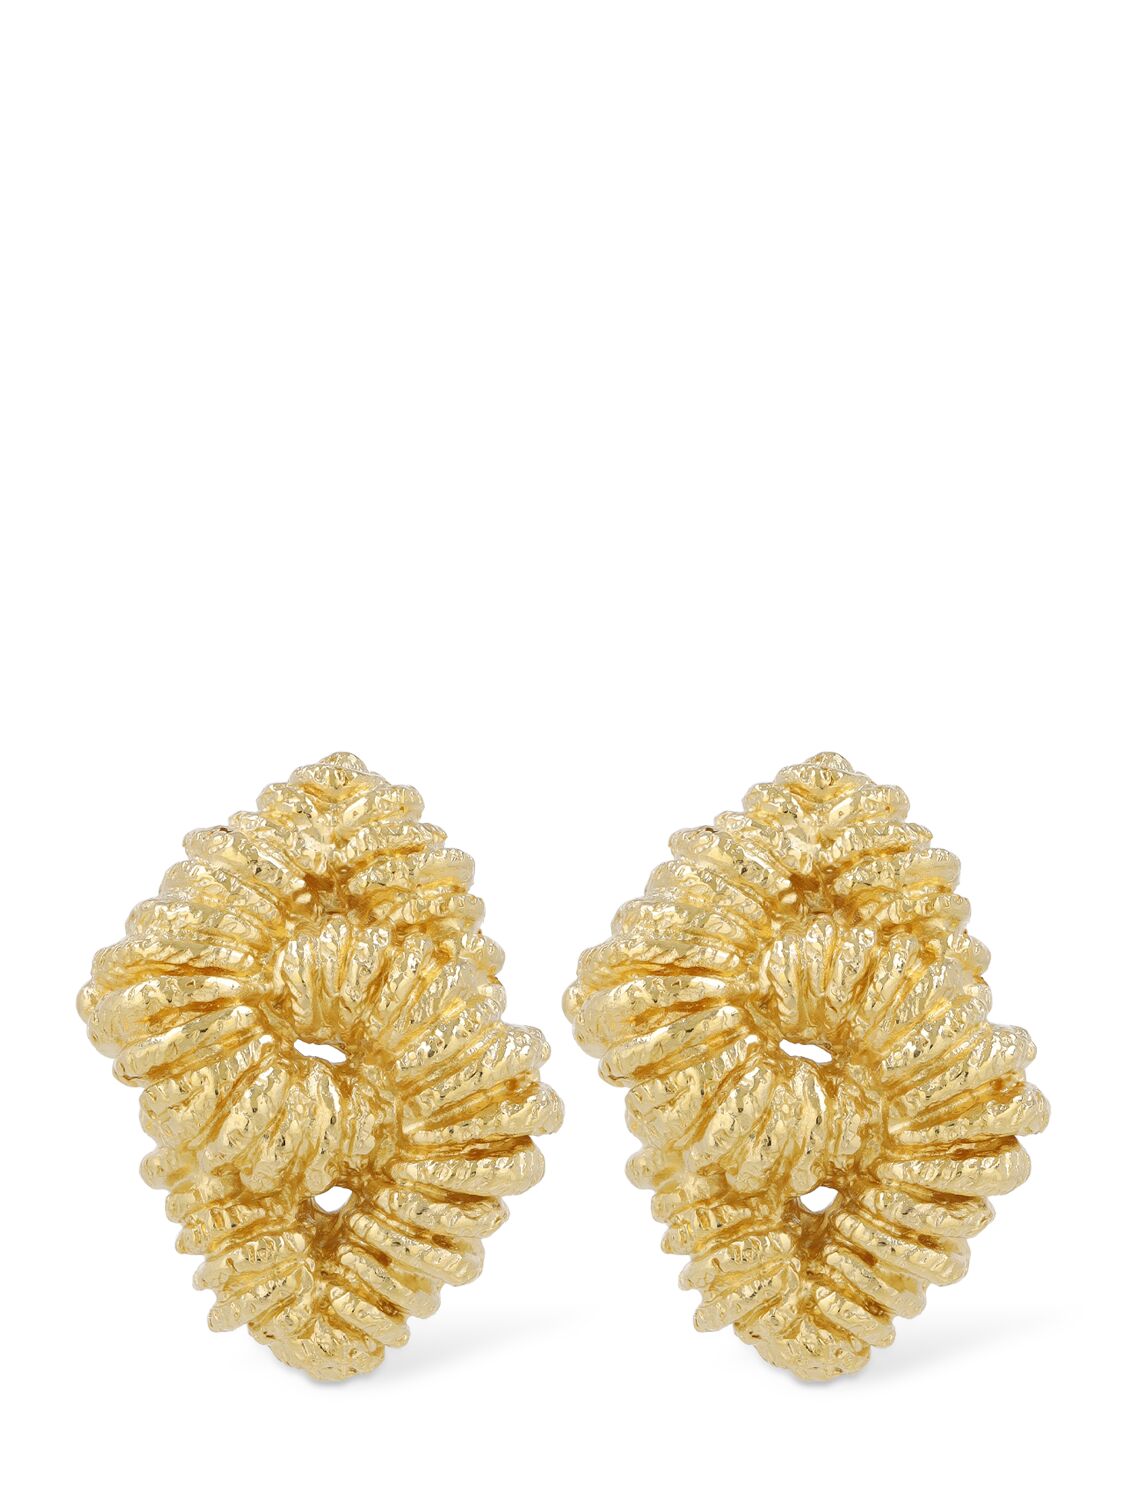 Paola Sighinolfi Loto Stud Earrings In Gold